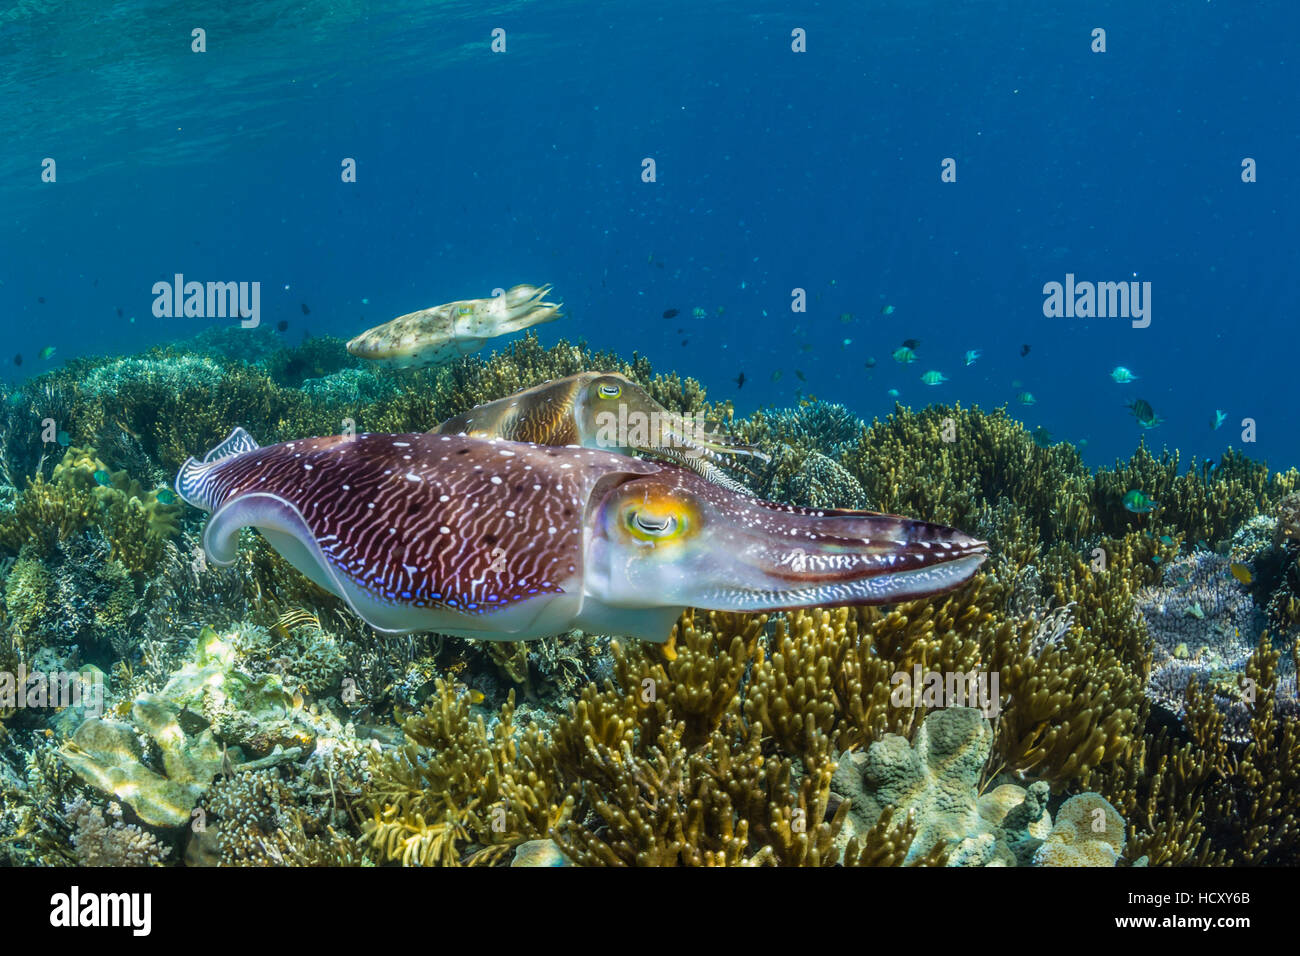 Adult broadclub cuttlefish (Sepia latimanus) courtship display, Sebayur Island, Flores Sea, Indonesia Stock Photo